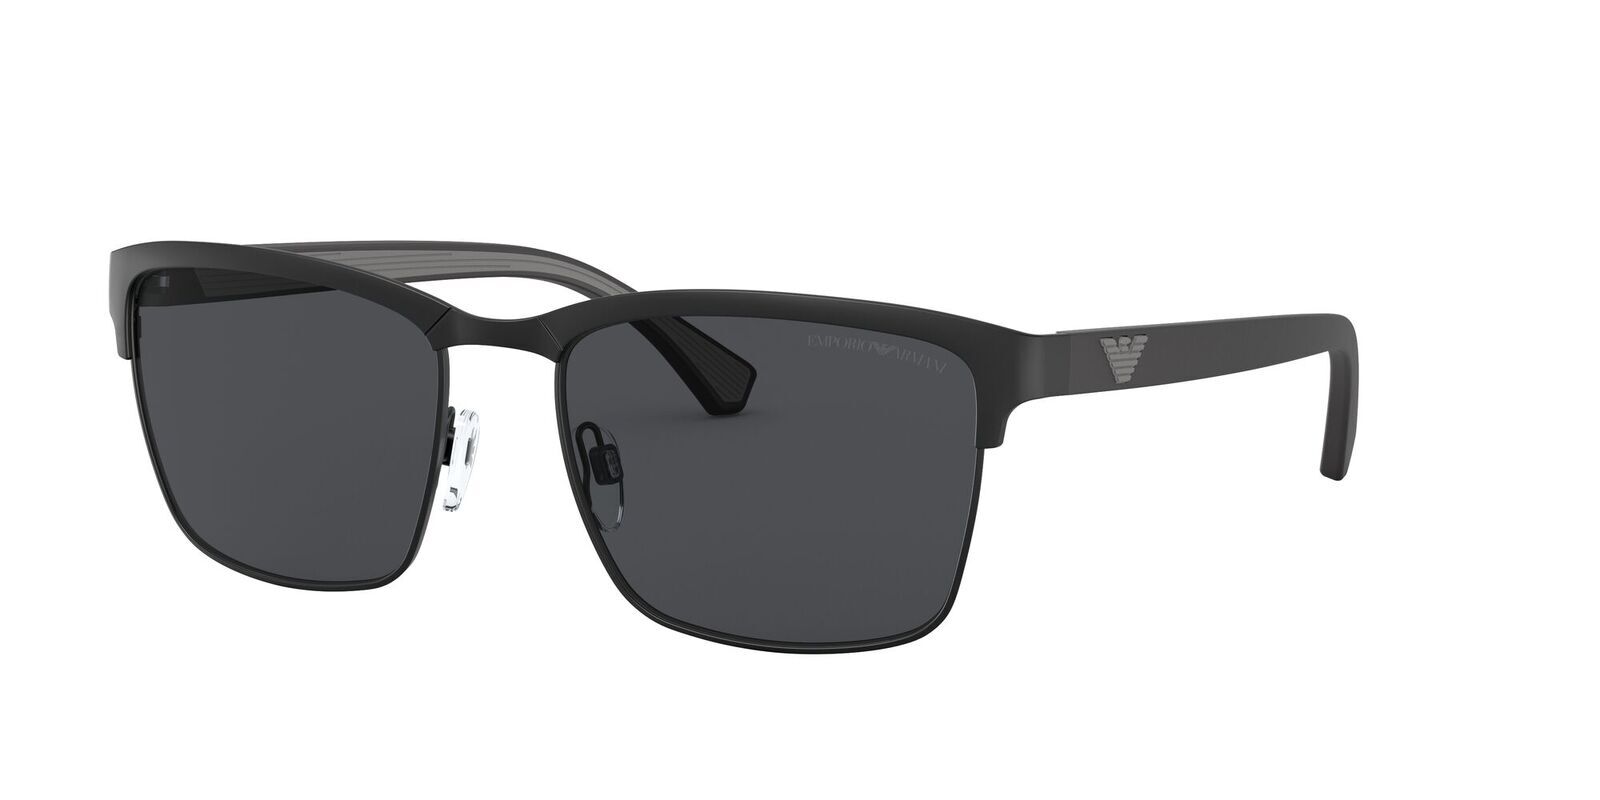 Giorgio Armani - Round Sunglasses - Black - Sunglasses - Giorgio Armani  Eyewear - Avvenice